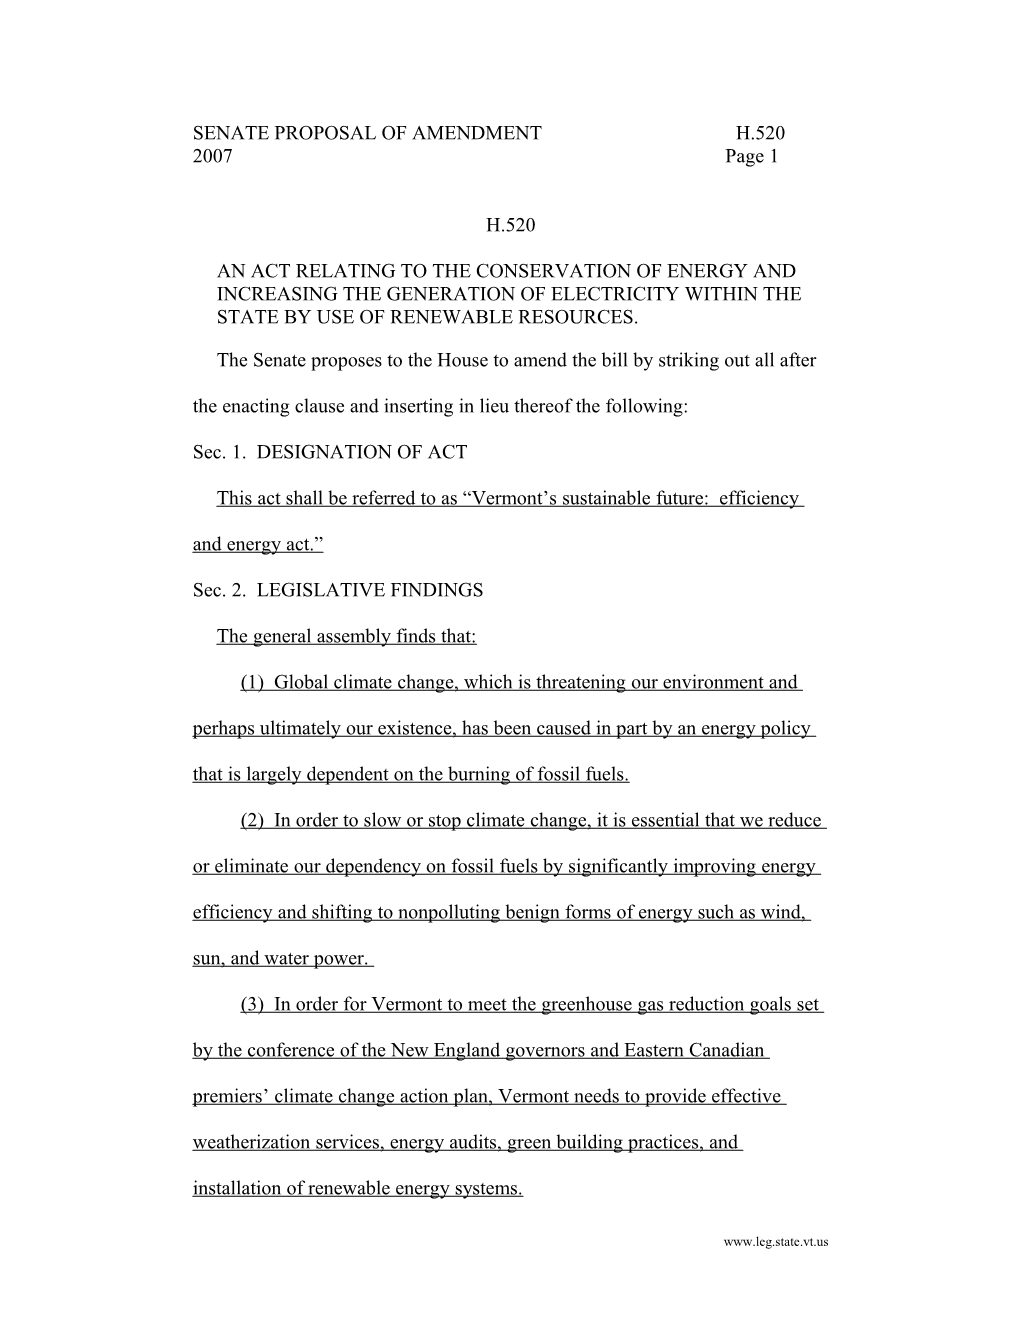 Senate Proposal of Amendmenth.520